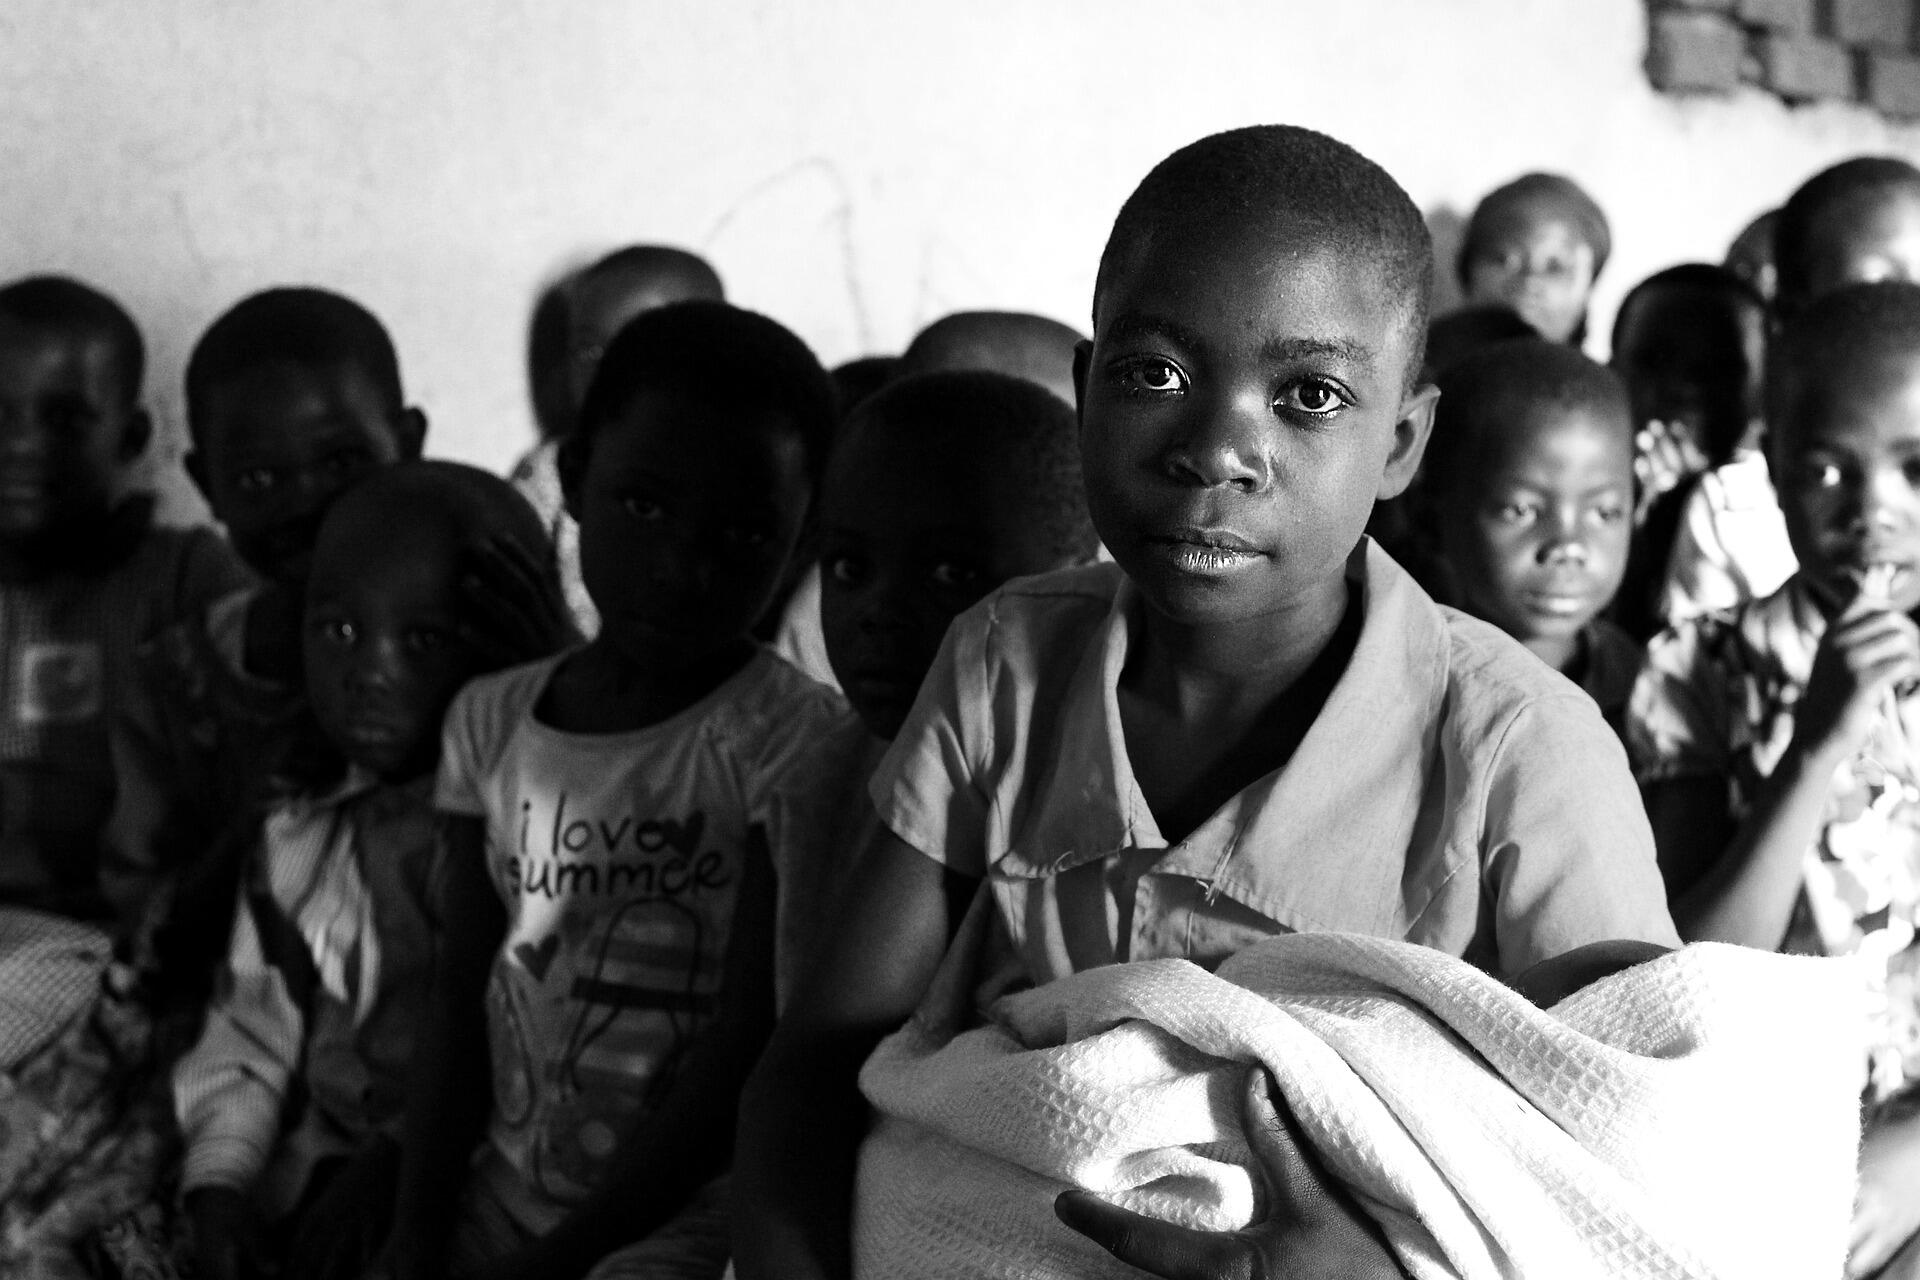 children-of-uganda-2245270_1920